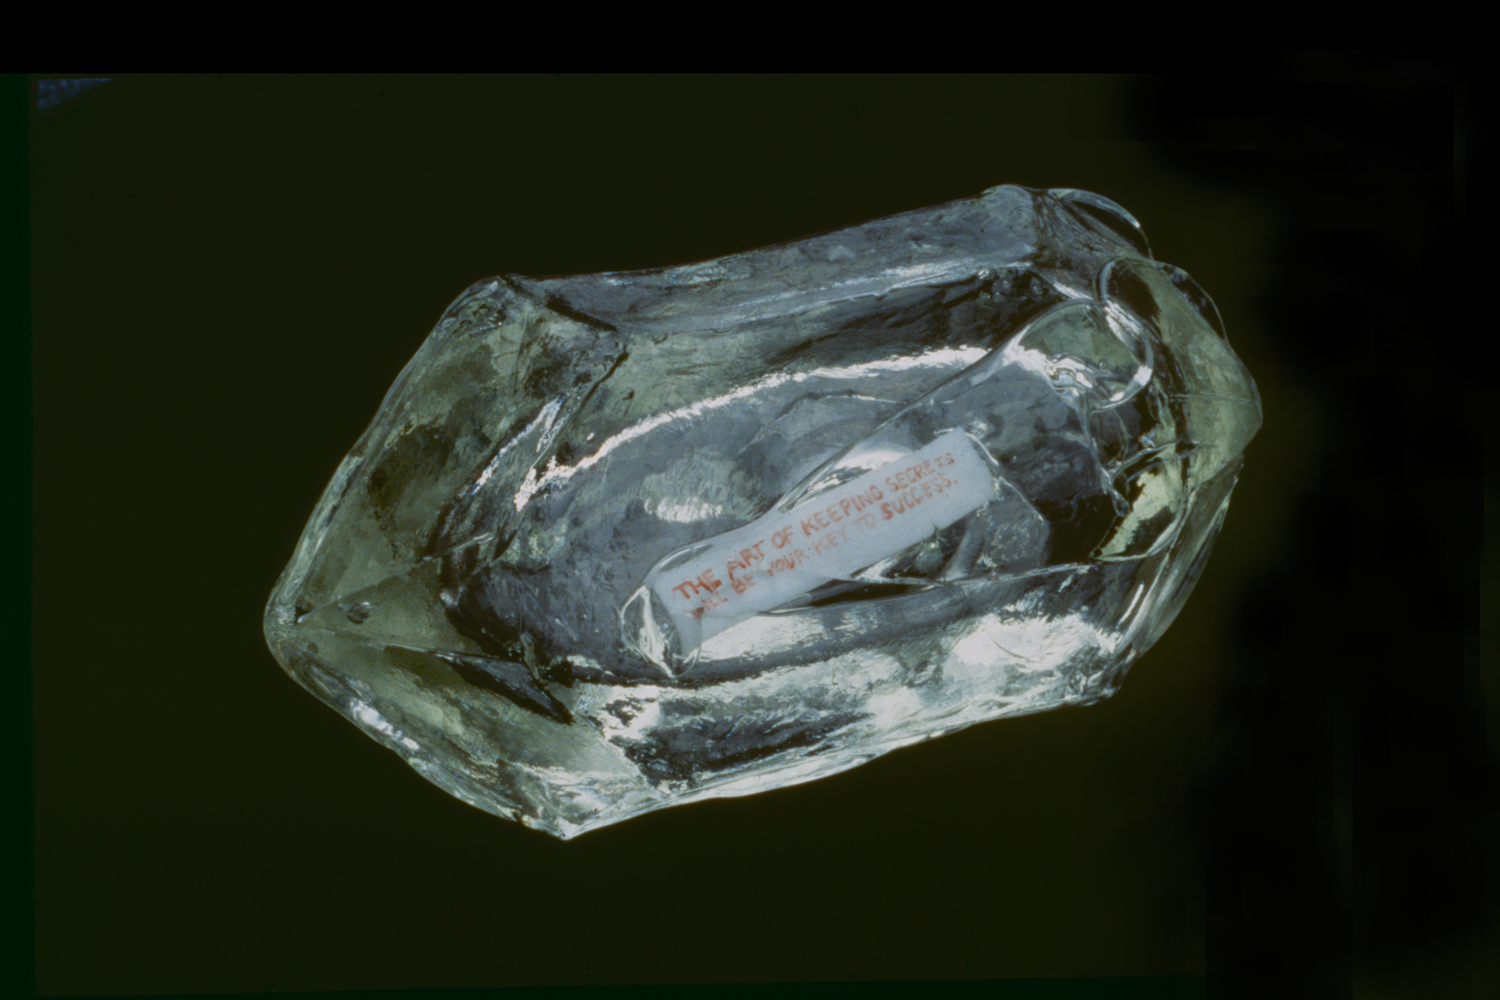 pilchuck-study-model-diamond-huebner-2.jpg